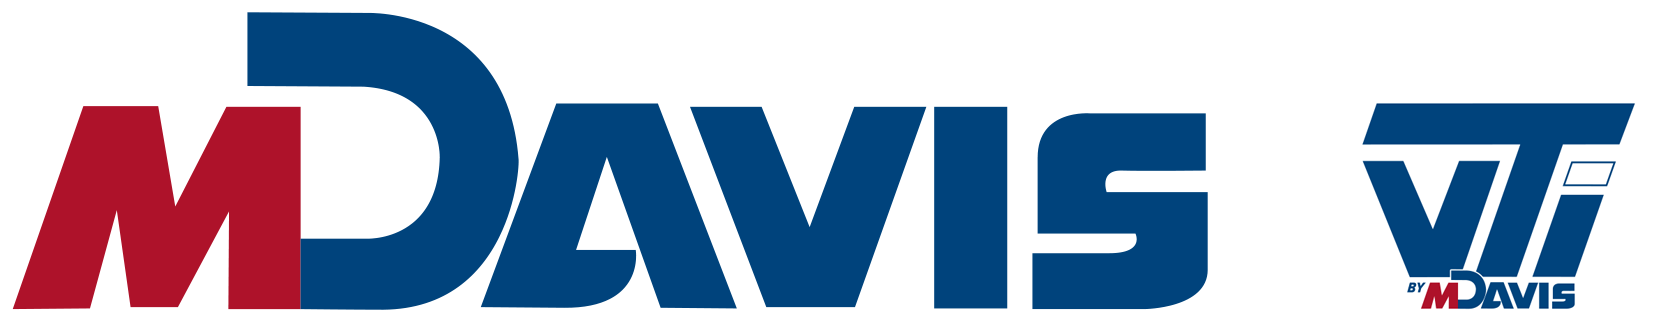 M. Davis and Sons logo with VTi by M. Davis Logo